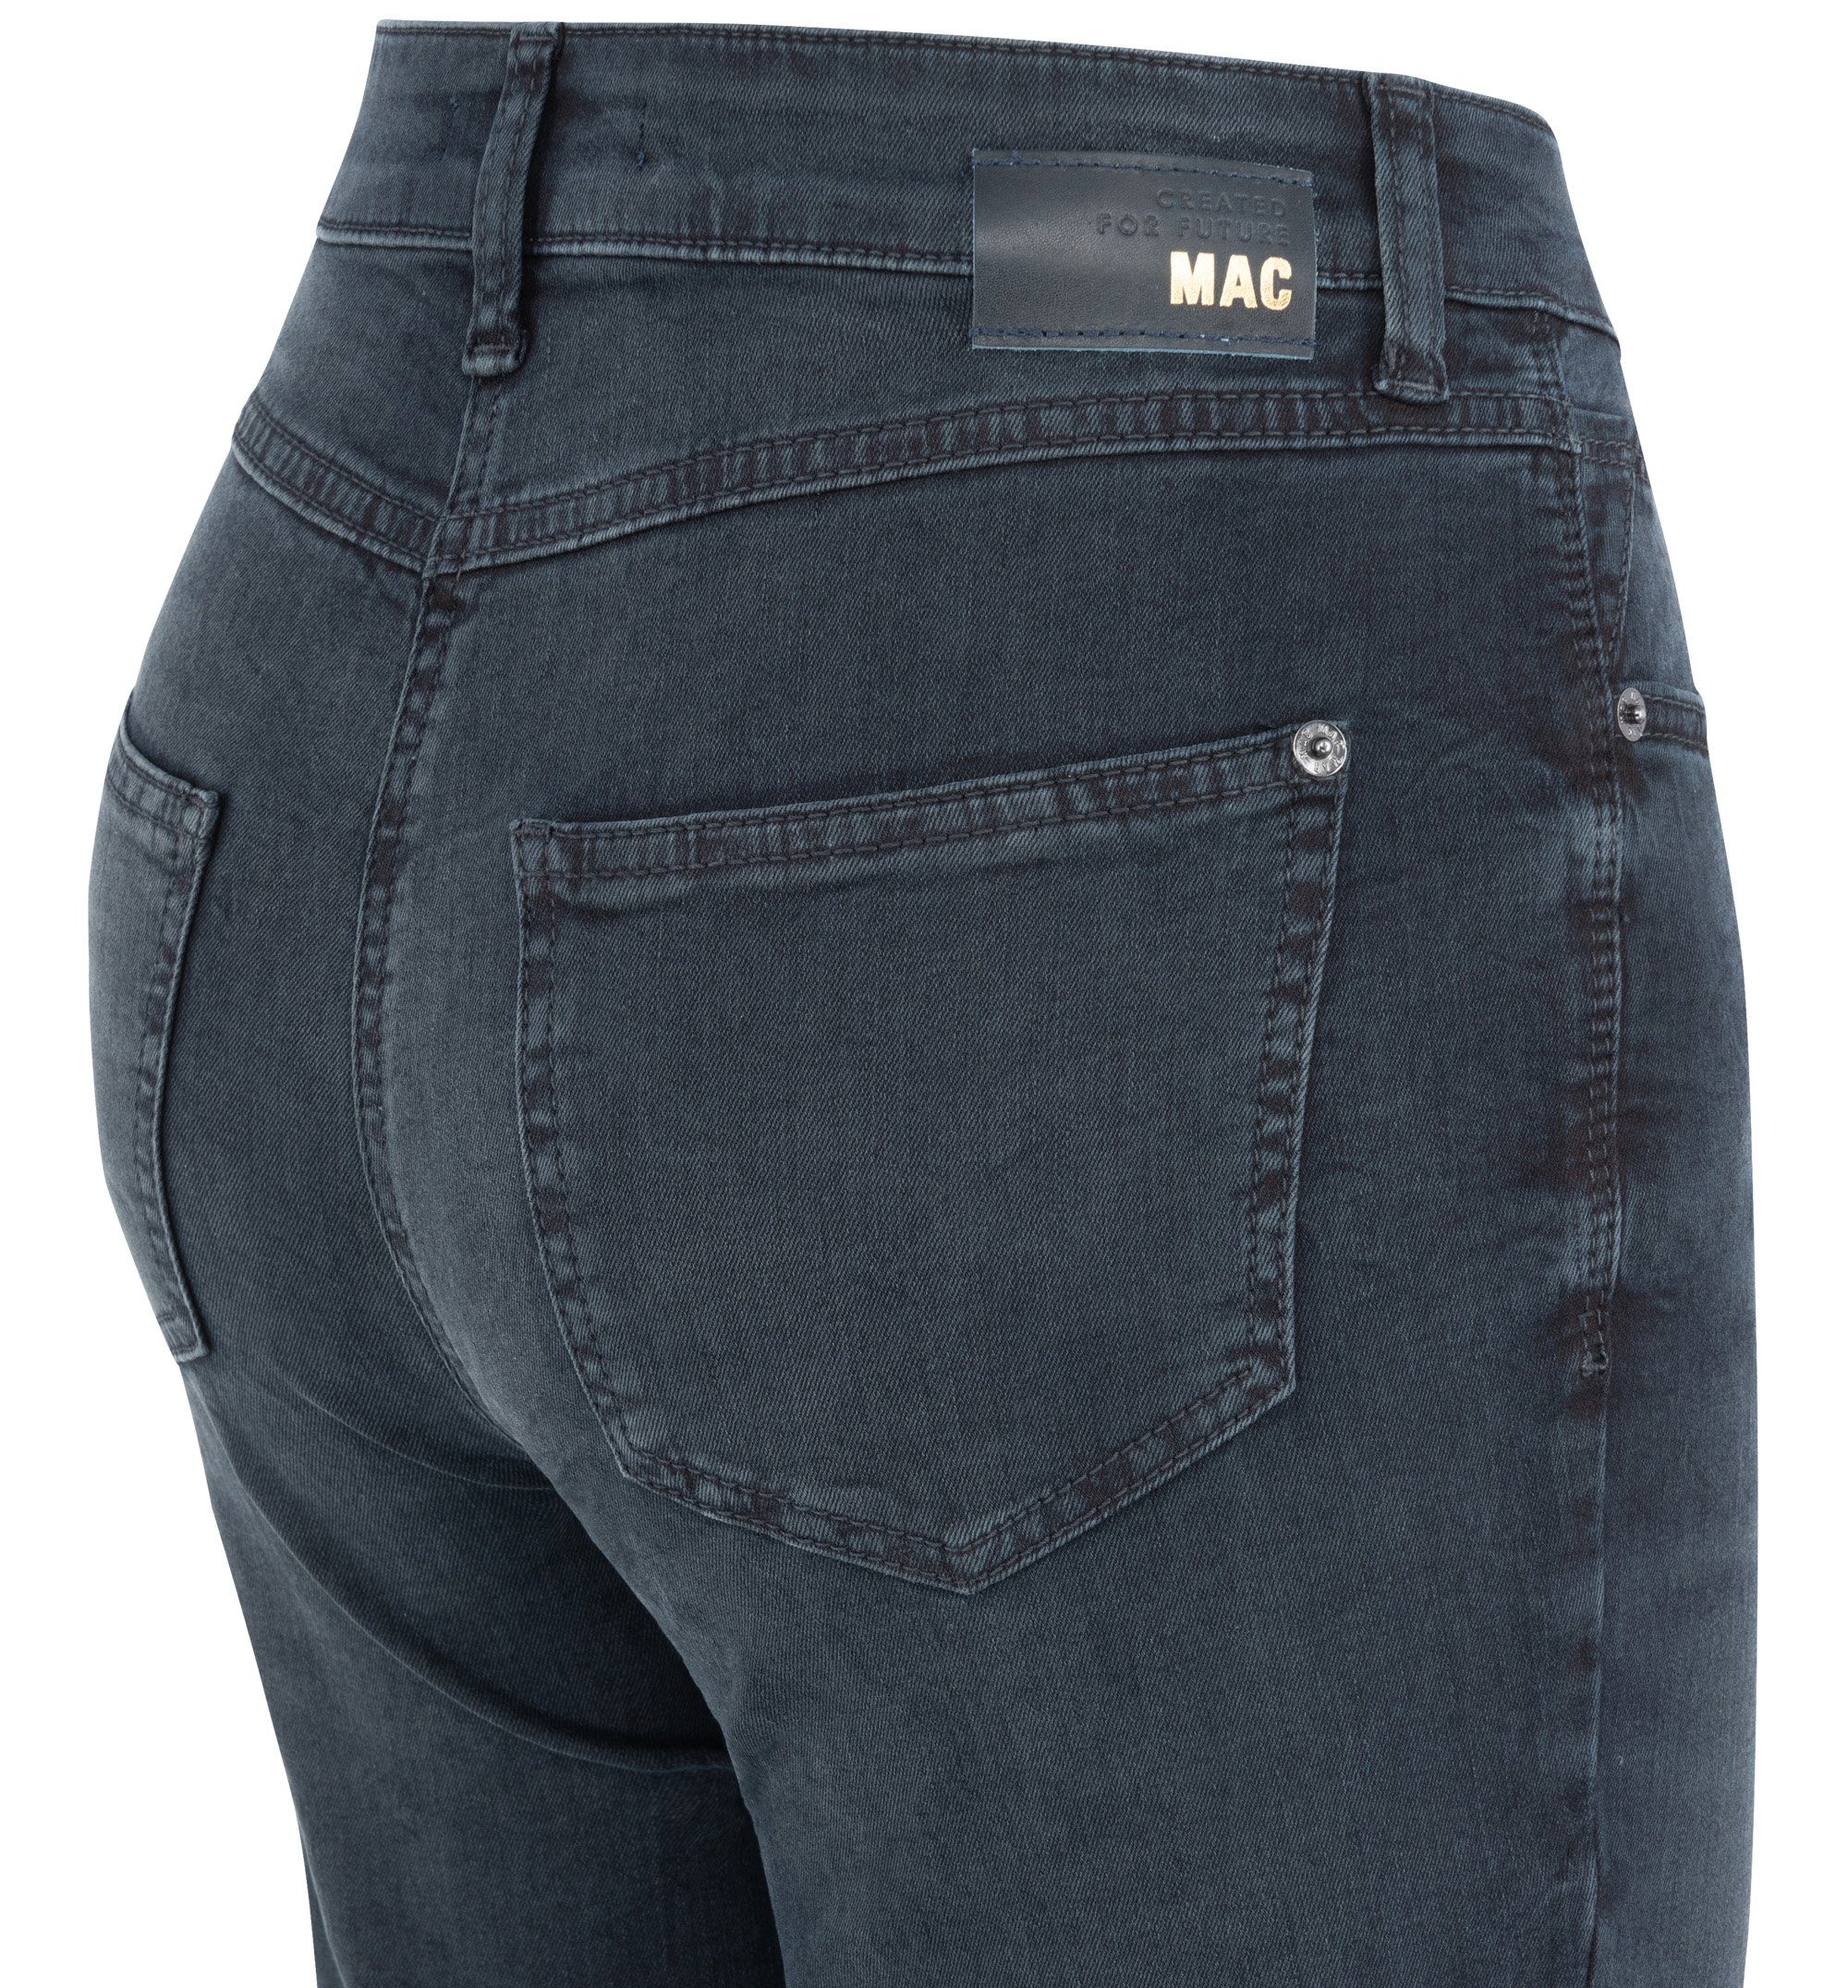 MAC Stretch-Jeans MAC MELANIE dark D899 5040-90-0380 blue night